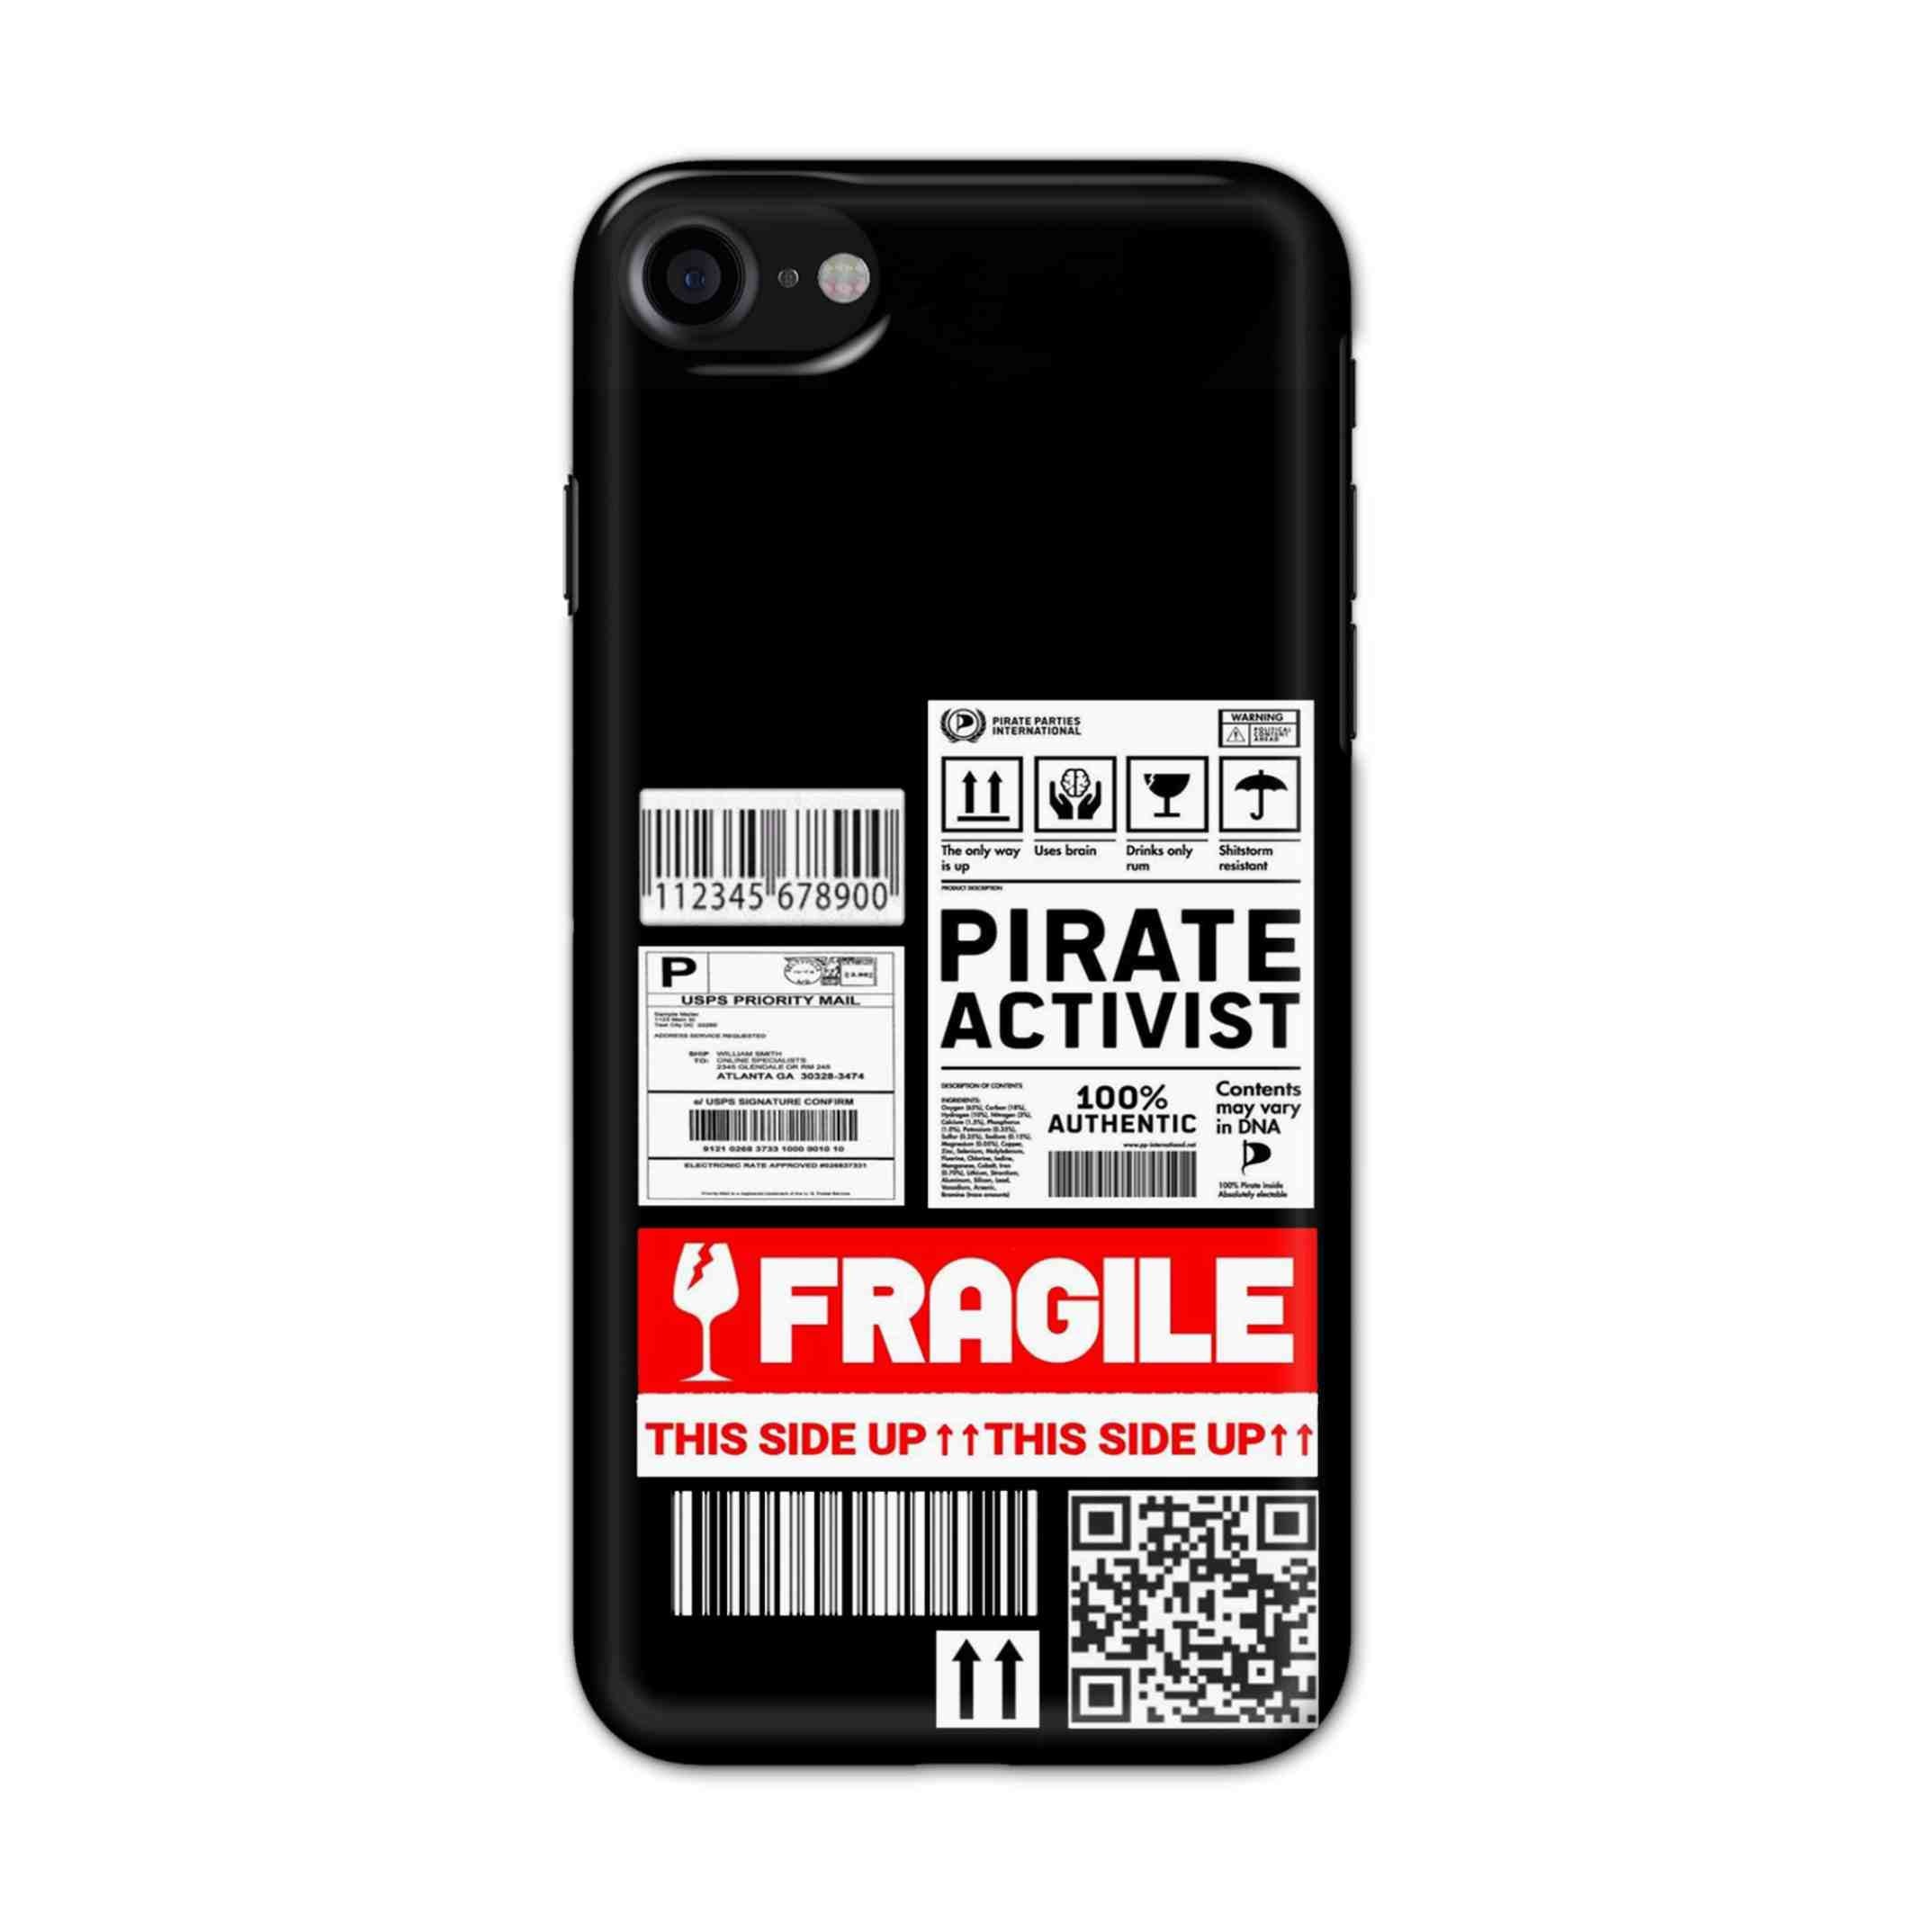 Buy Fragile Hard Back Mobile Phone Case/Cover For iPhone 7 / 8 Online